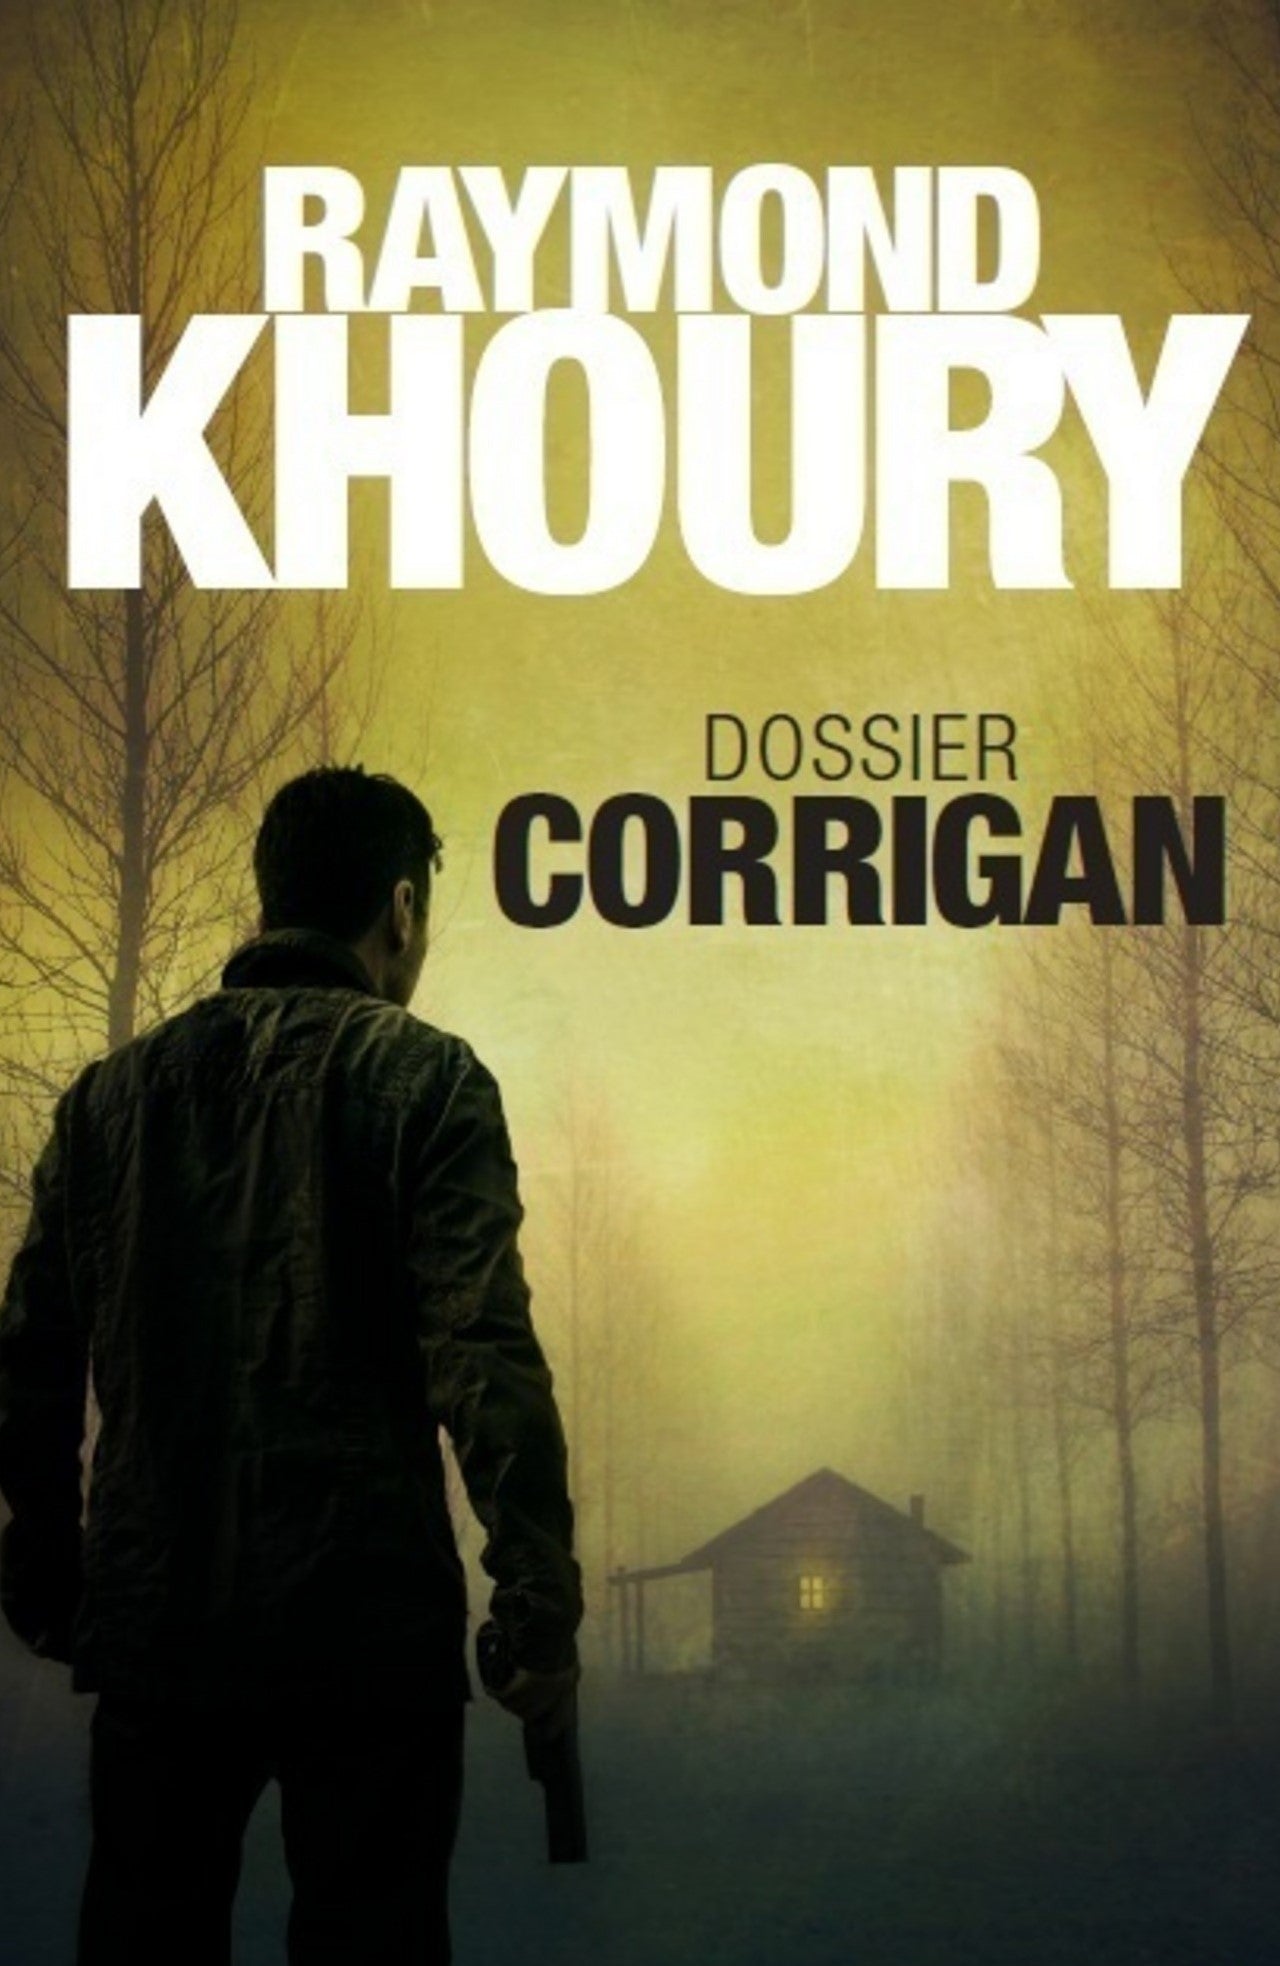 Dossier corrigan - Raymond Khoury